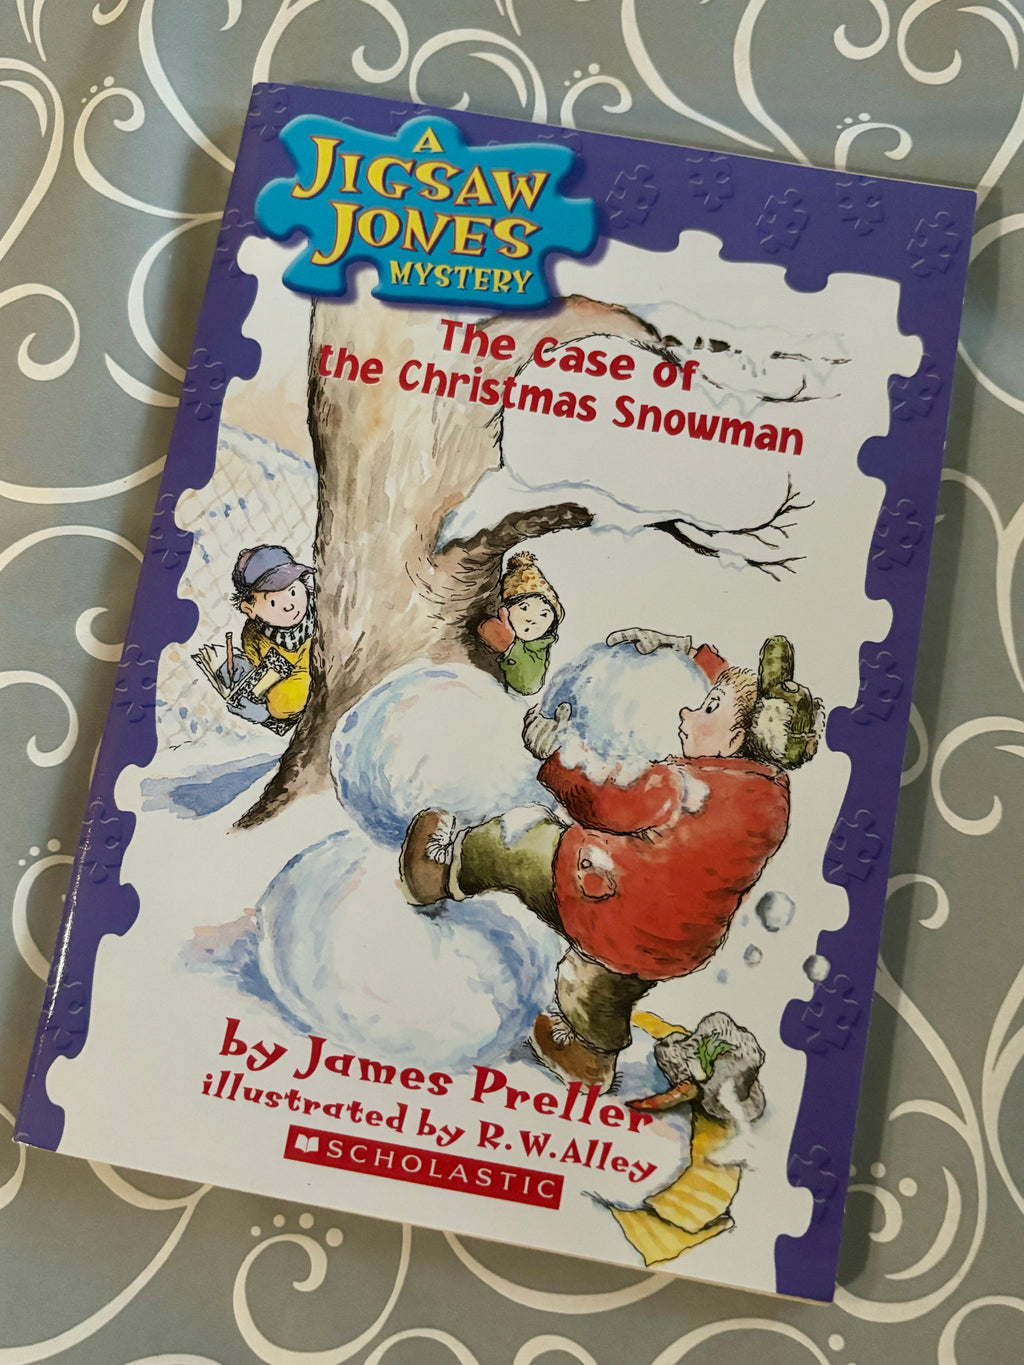 A Jigsaw Jones Mystery: The Case of the Christmas Snowman- By James Preller